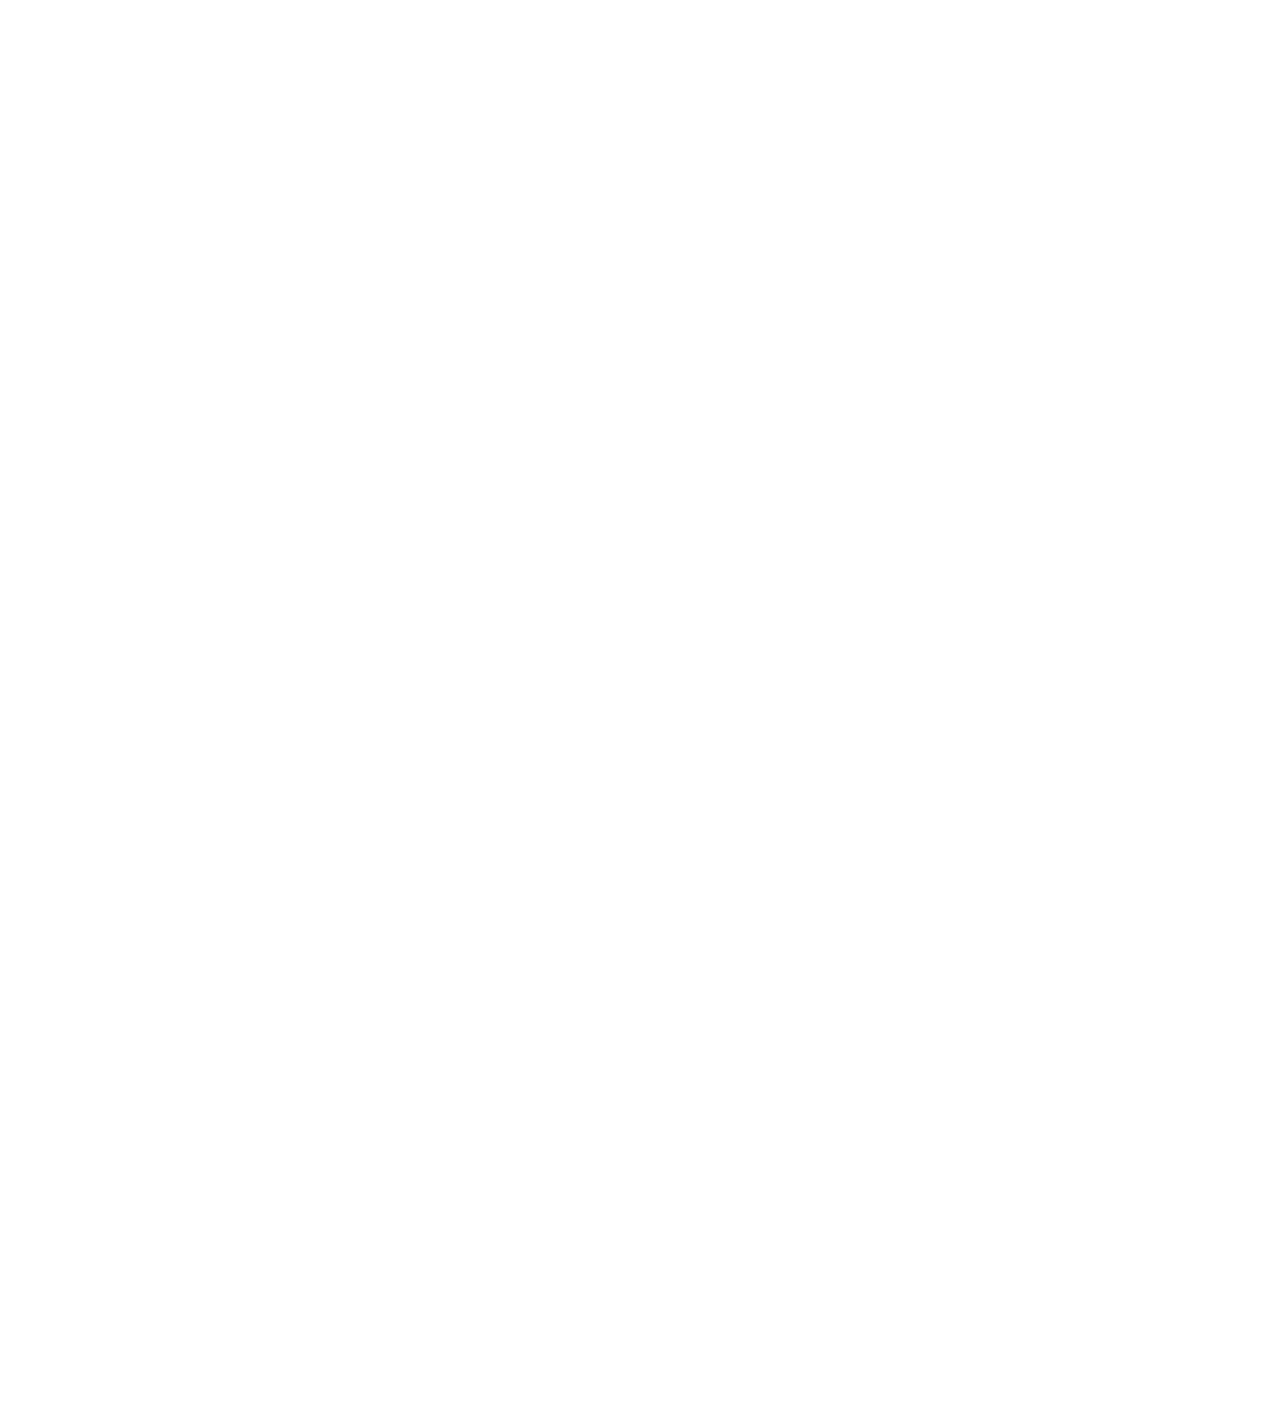 Crestwood Equity Partners logo for dark backgrounds (transparent PNG)